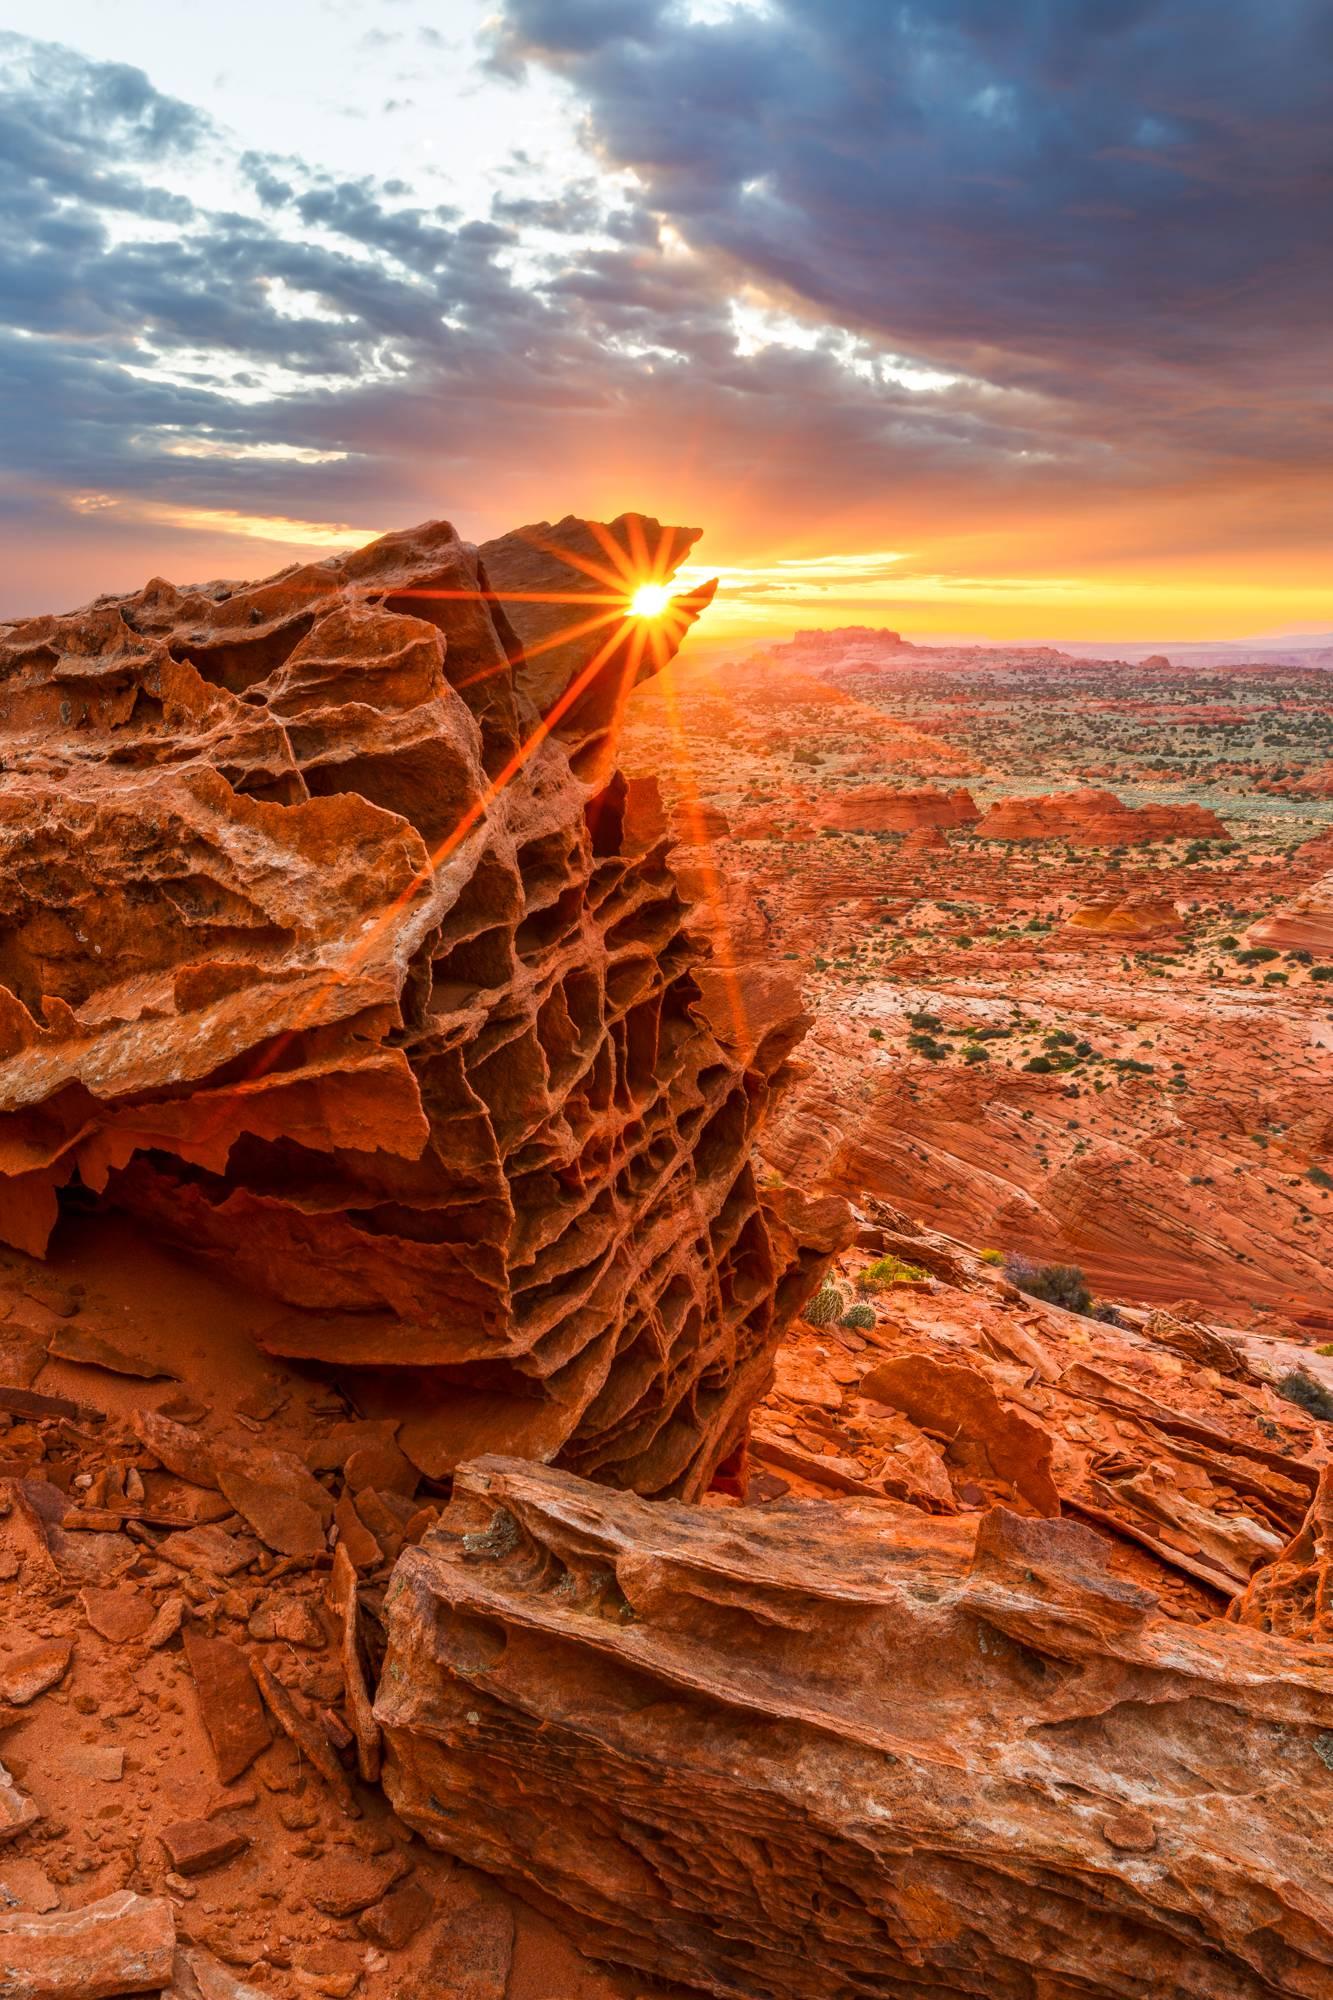 Jessica Fridrich Landscape Photograph - Arizona landscape photography with red and yellow, "Resurrection", UV laminate